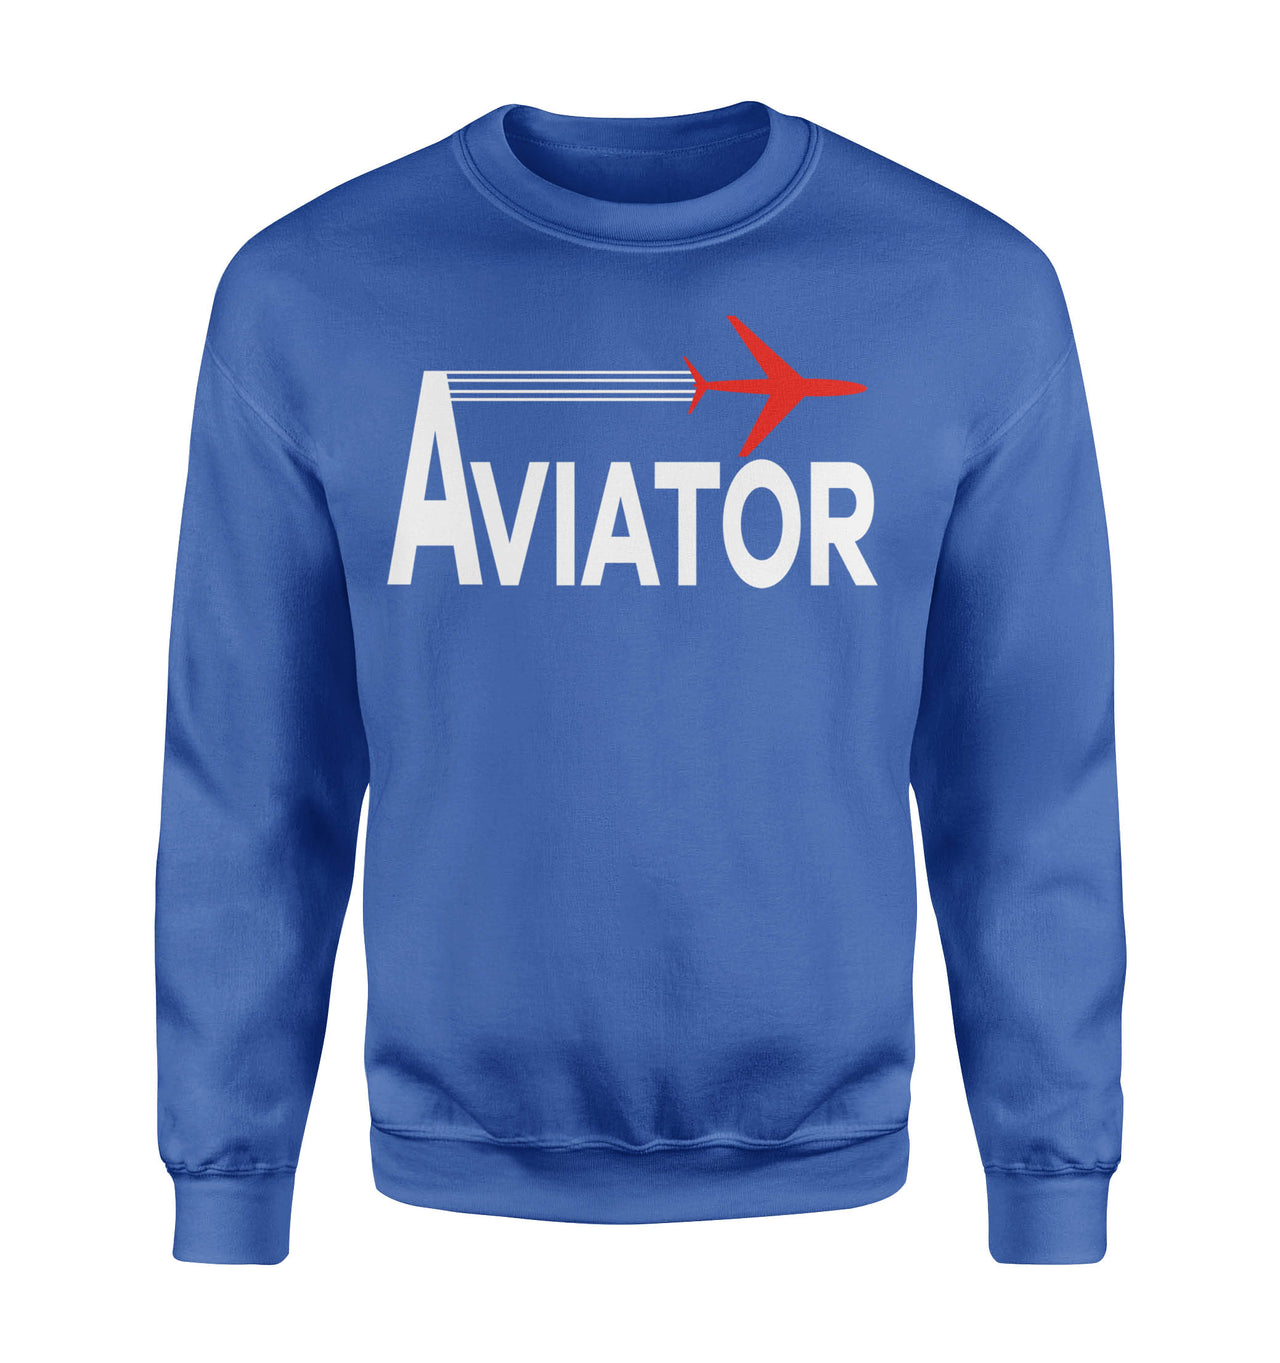 Aviator Designed Sweatshirts